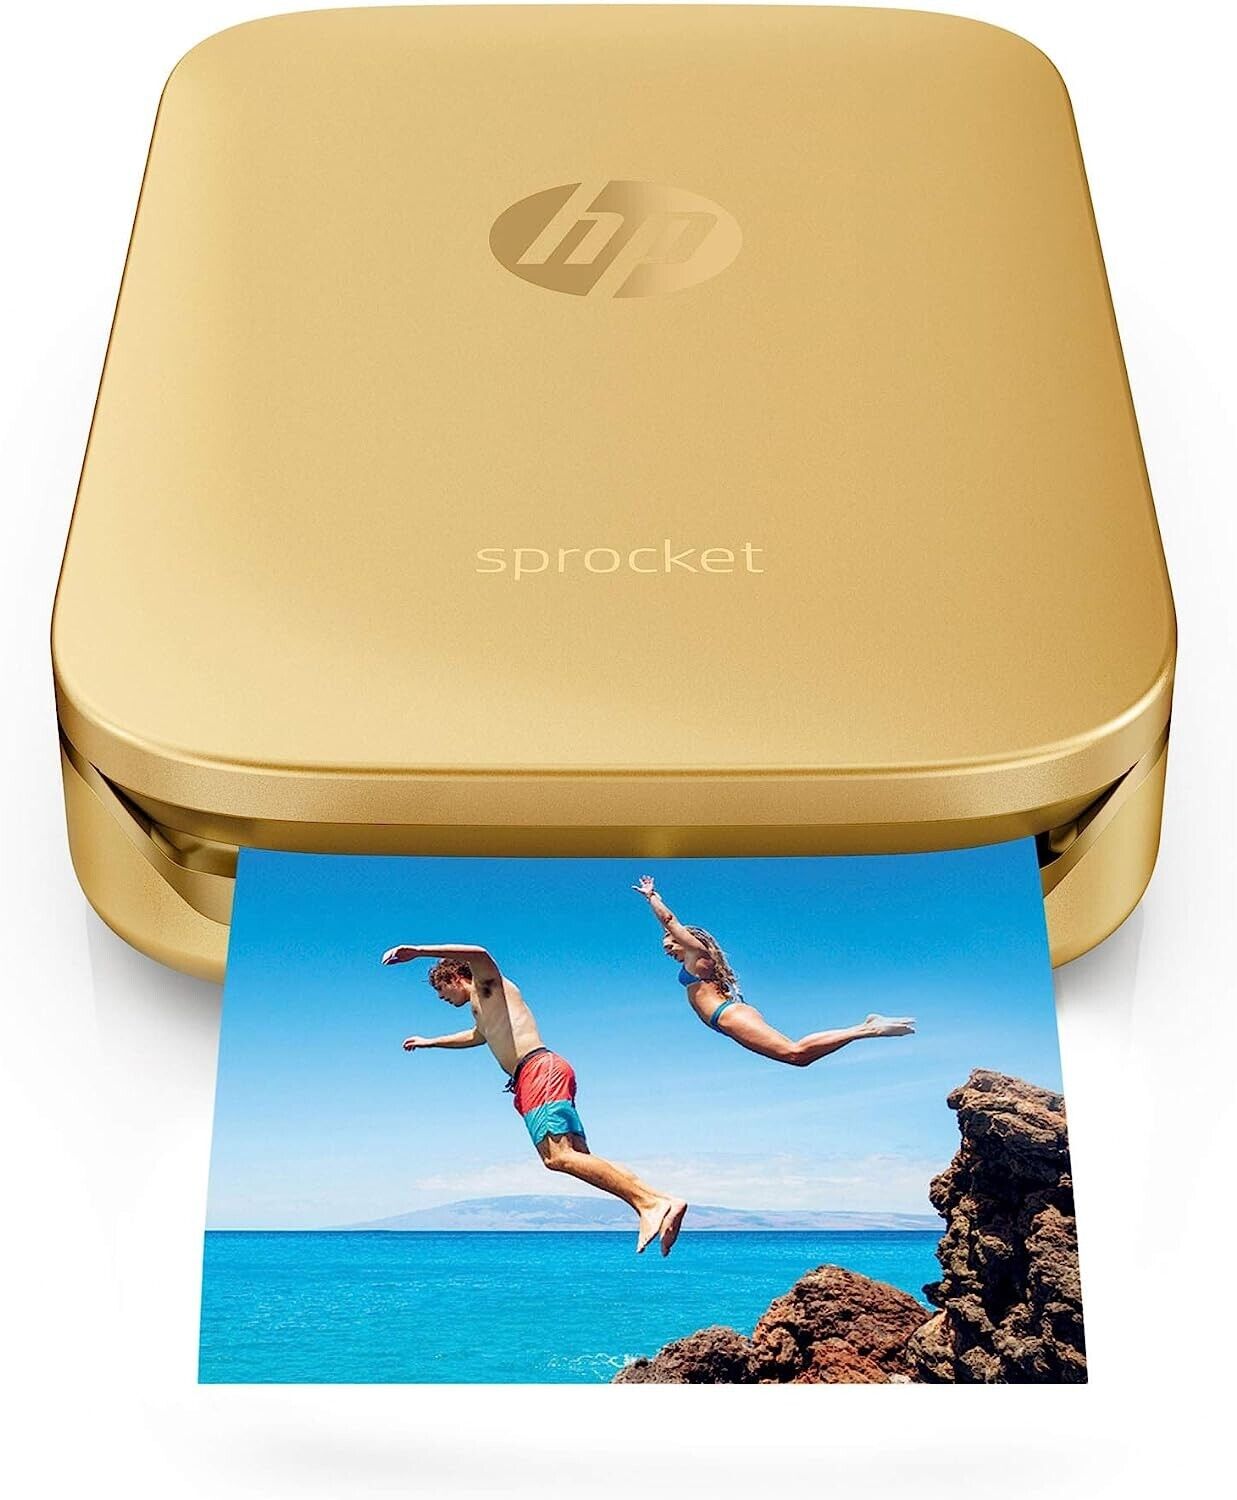 BRAND NEW HP Sprocket Portable Photo Printer Gold (Z3Z94A) First Edition